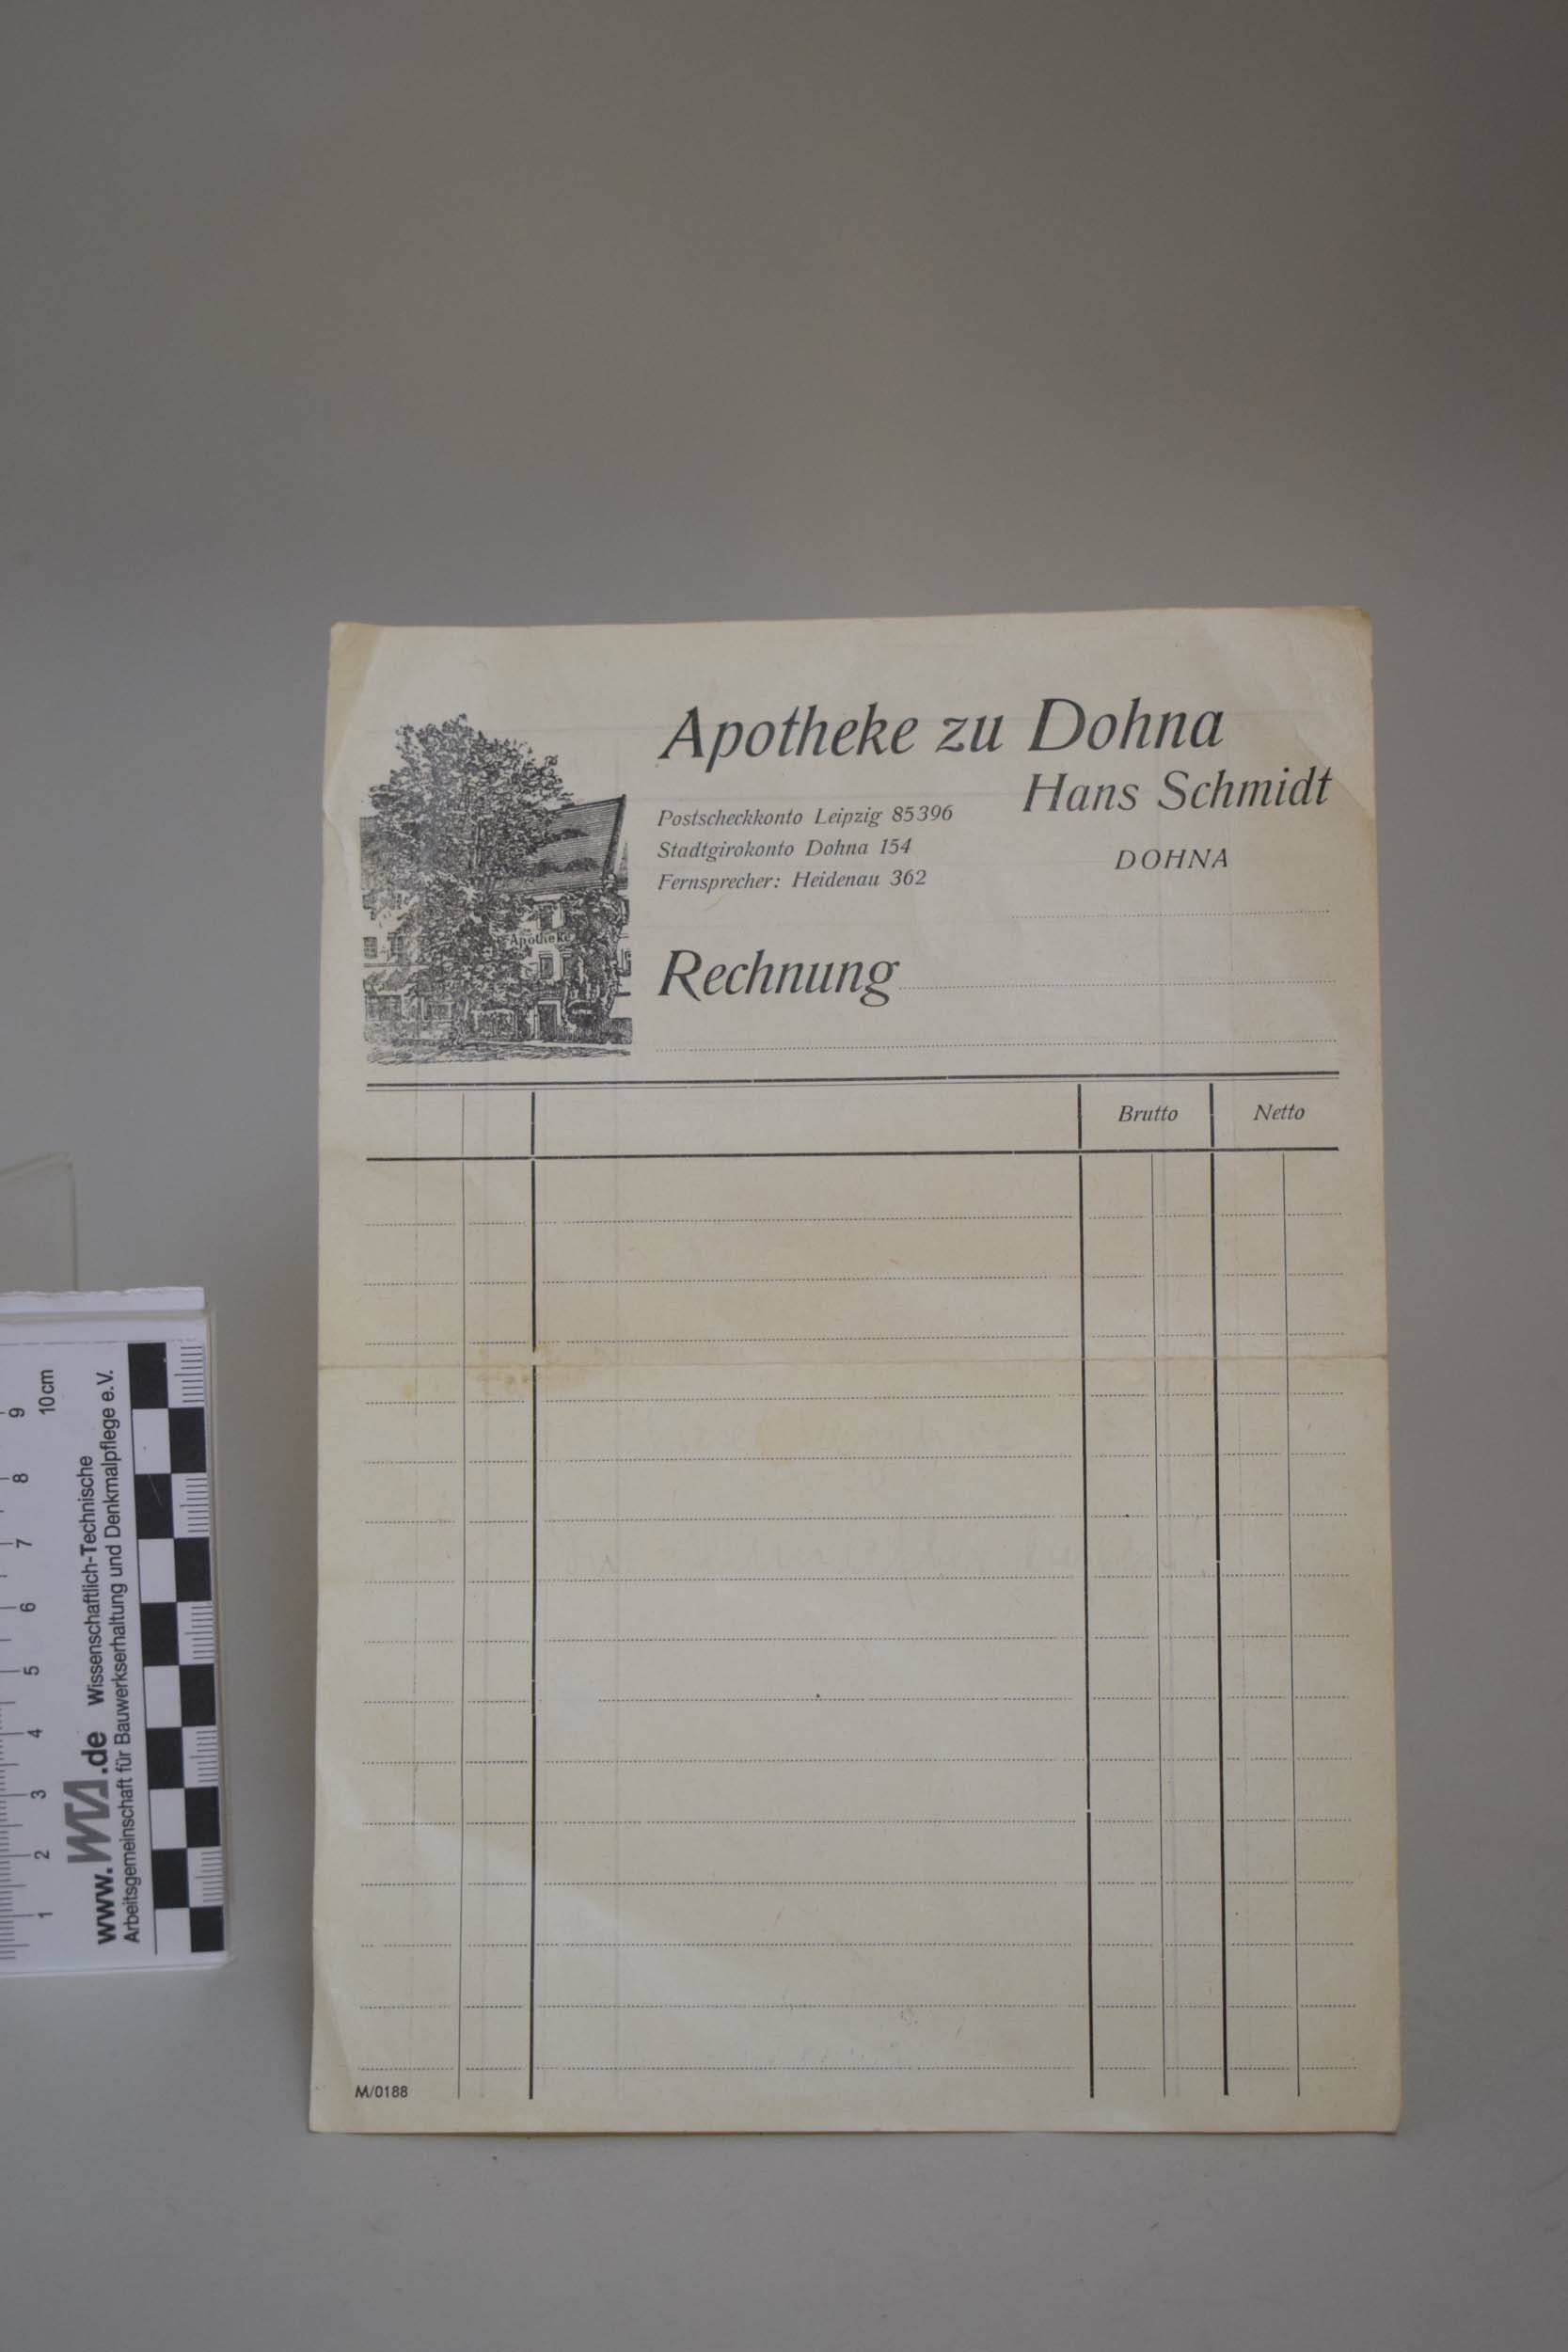 Rechnungsformular der Apotheke (Heimatmuseum Dohna CC BY-NC-SA)